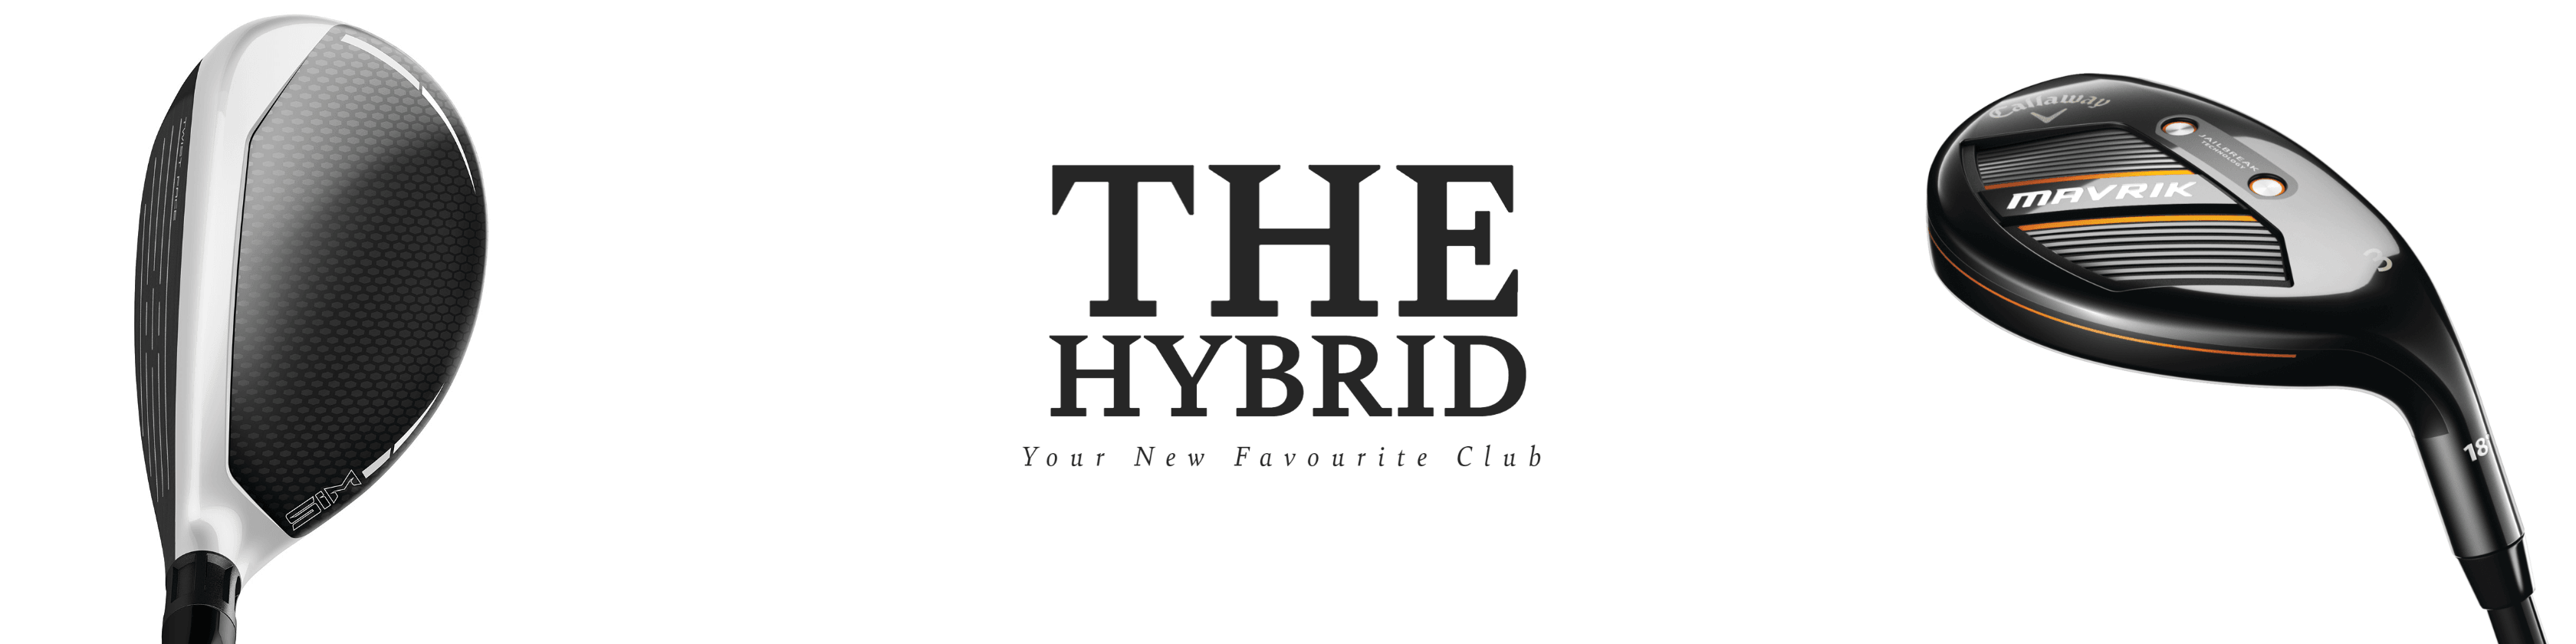 Men's Hybrids Pacific Golf Warehouse 